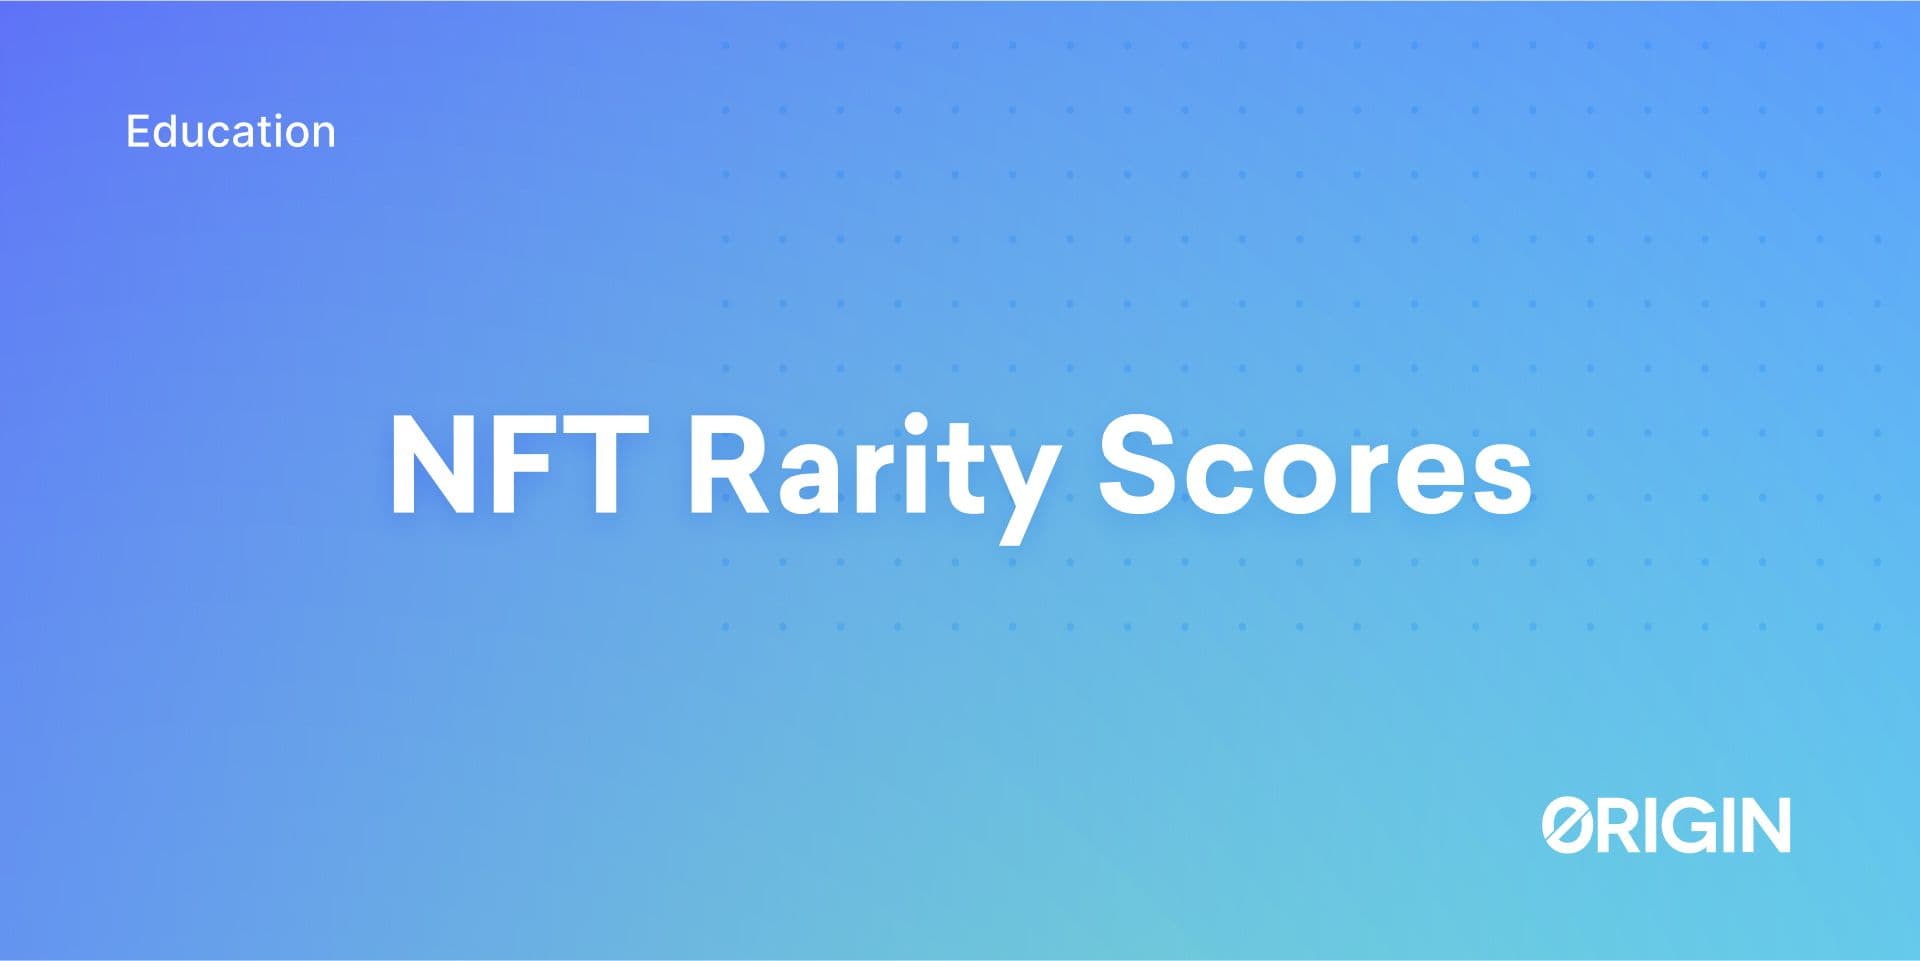 NFT rarity scores